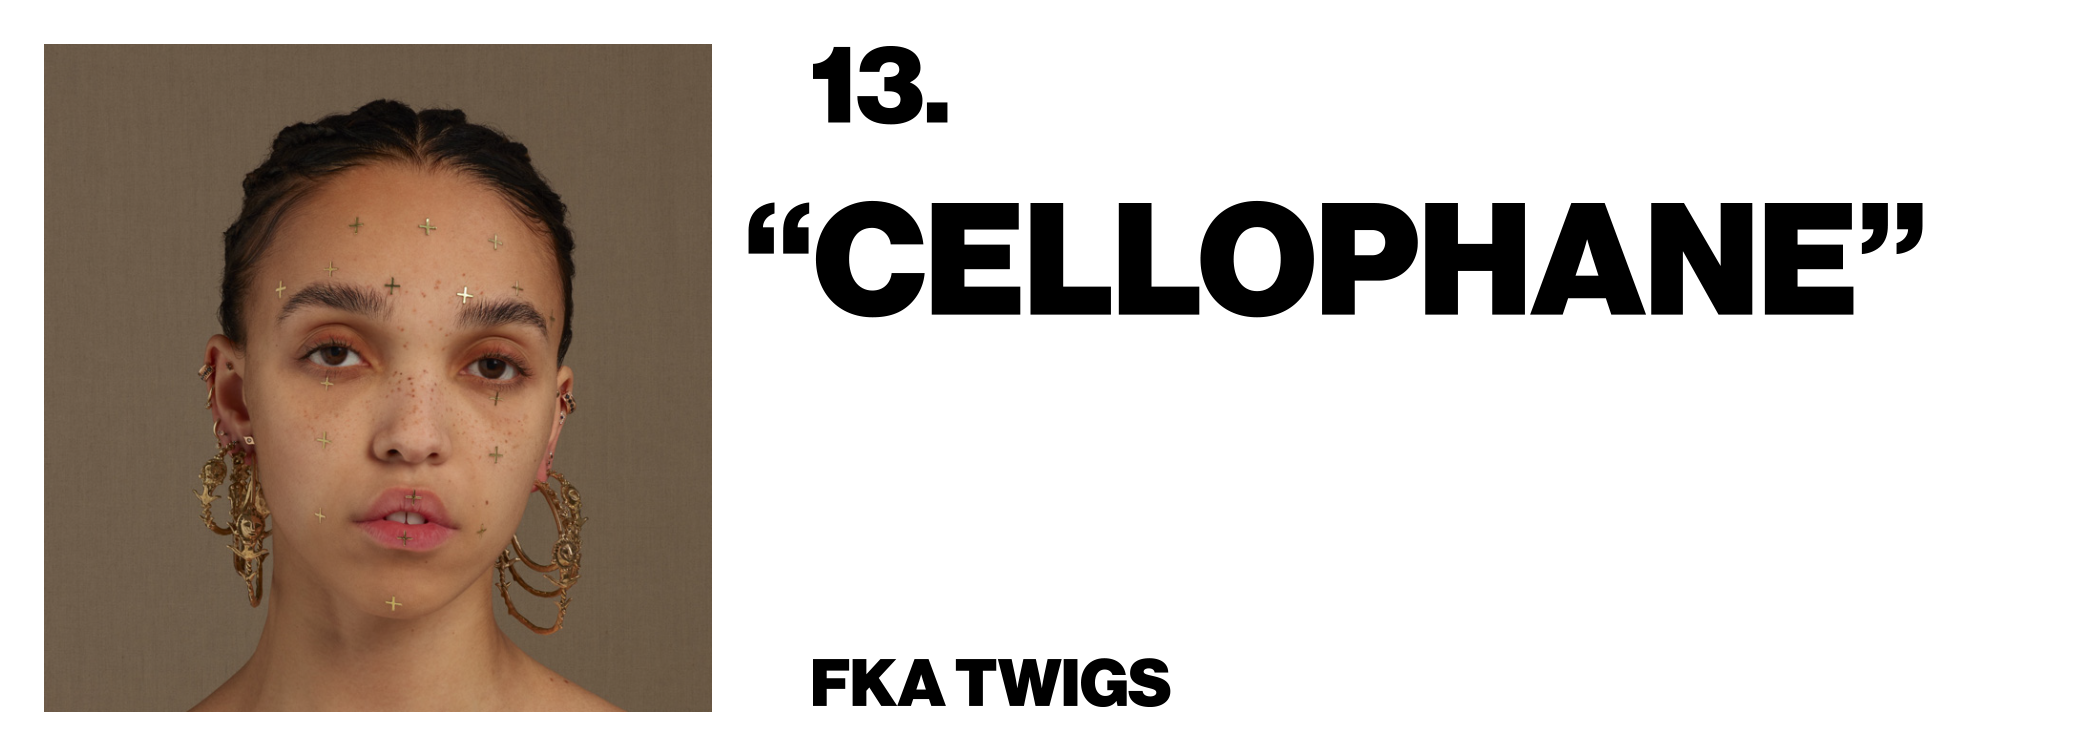 1576524257578-13-FKA-twigs-_Cellophane_